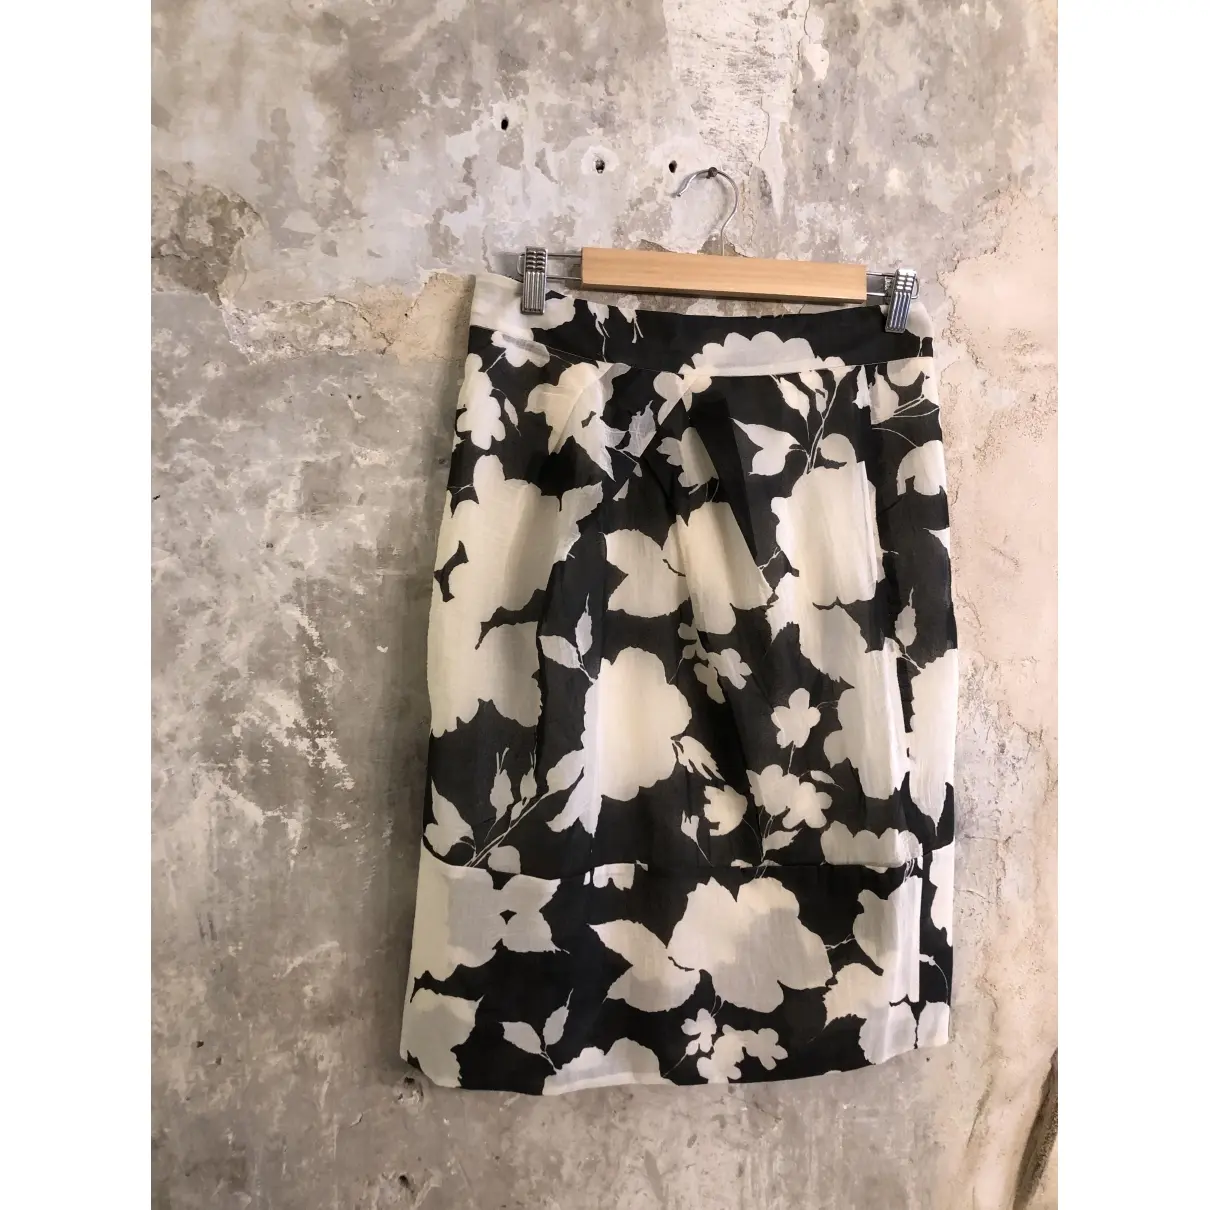 Antonio Marras Silk mid-length skirt for sale